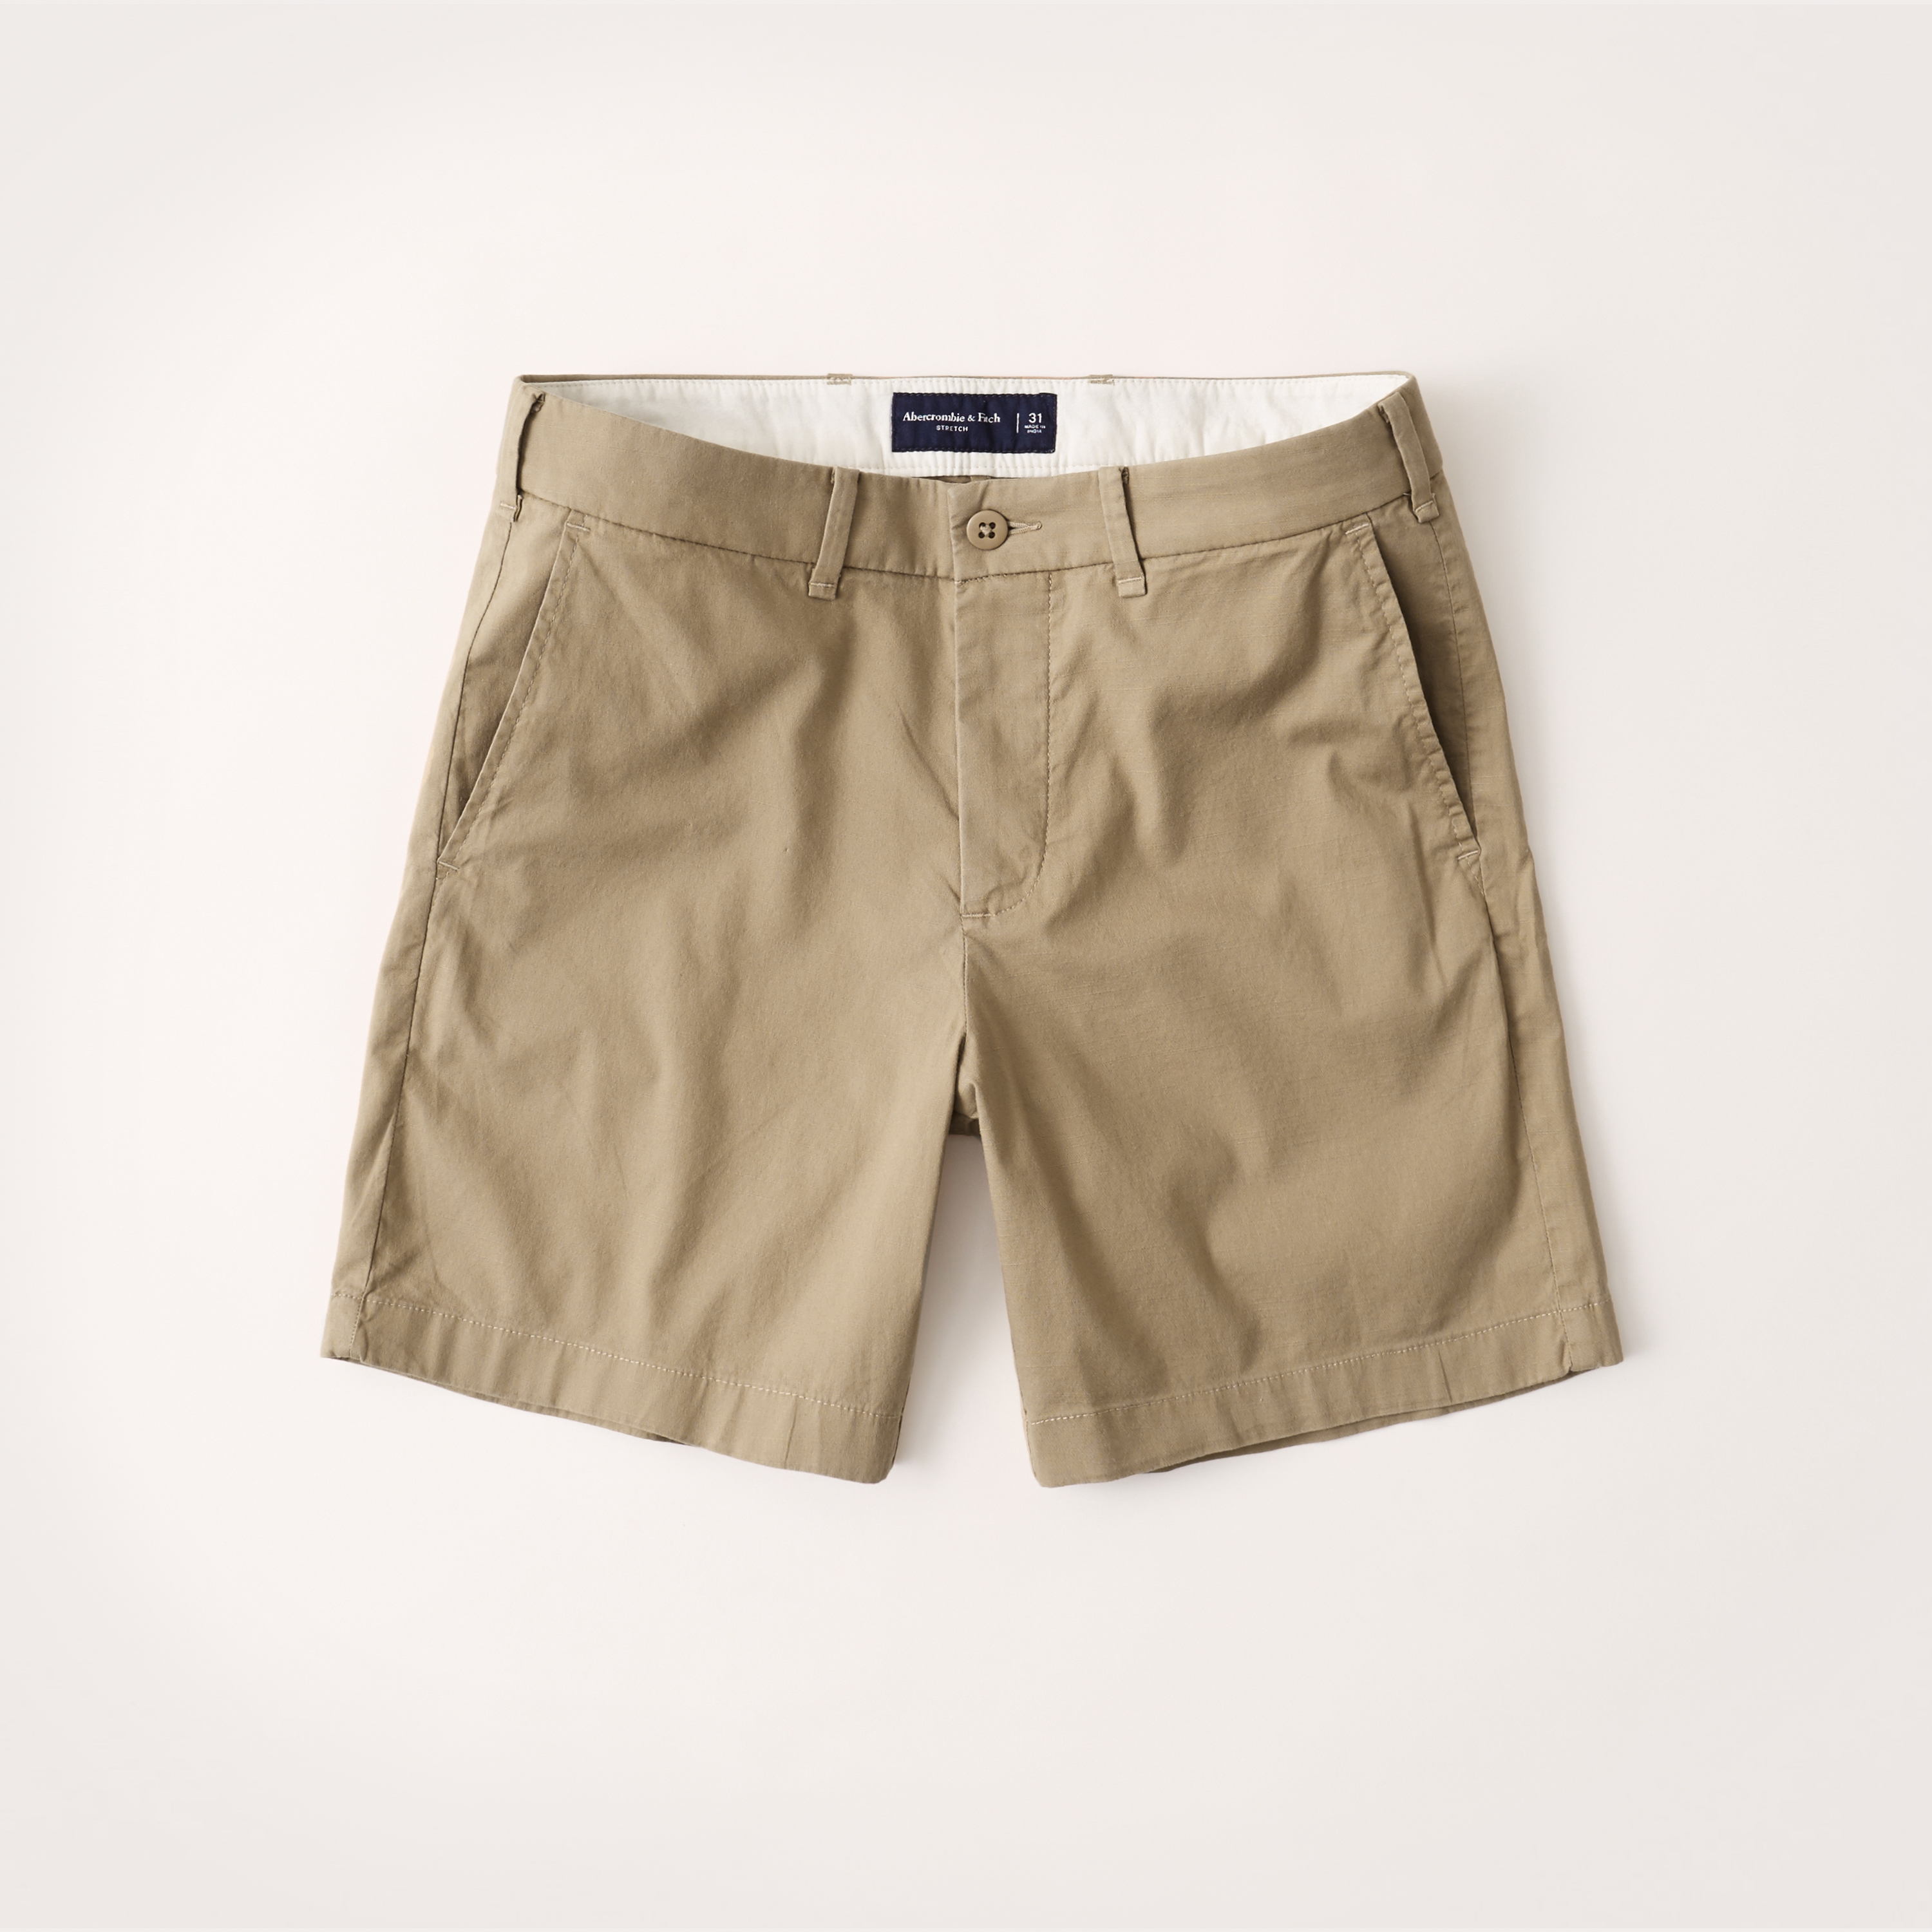 abercrombie longer shorts